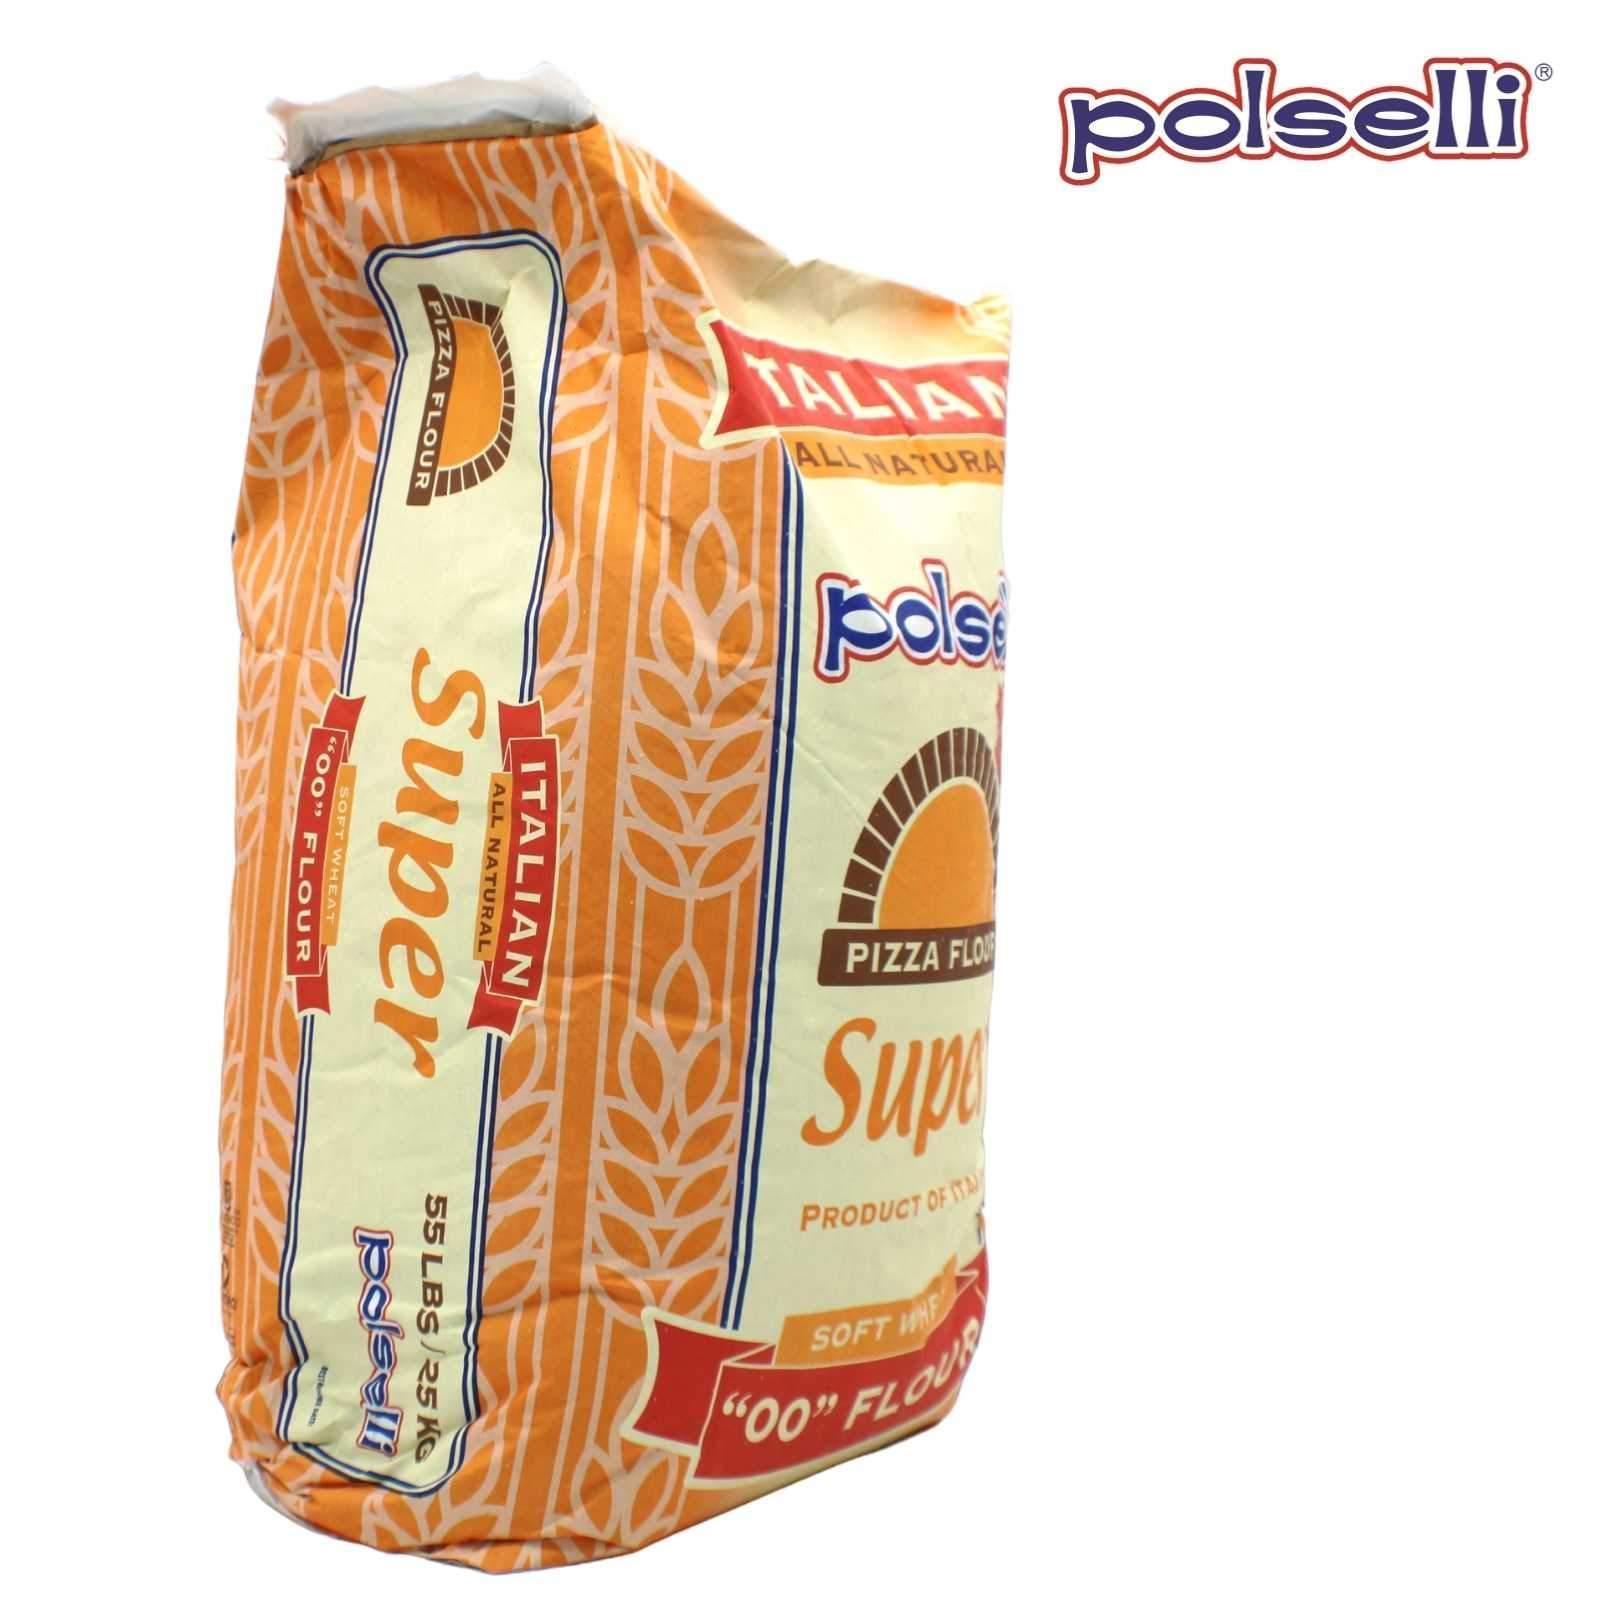 Polselli Super Pizza Flour 55lbs side